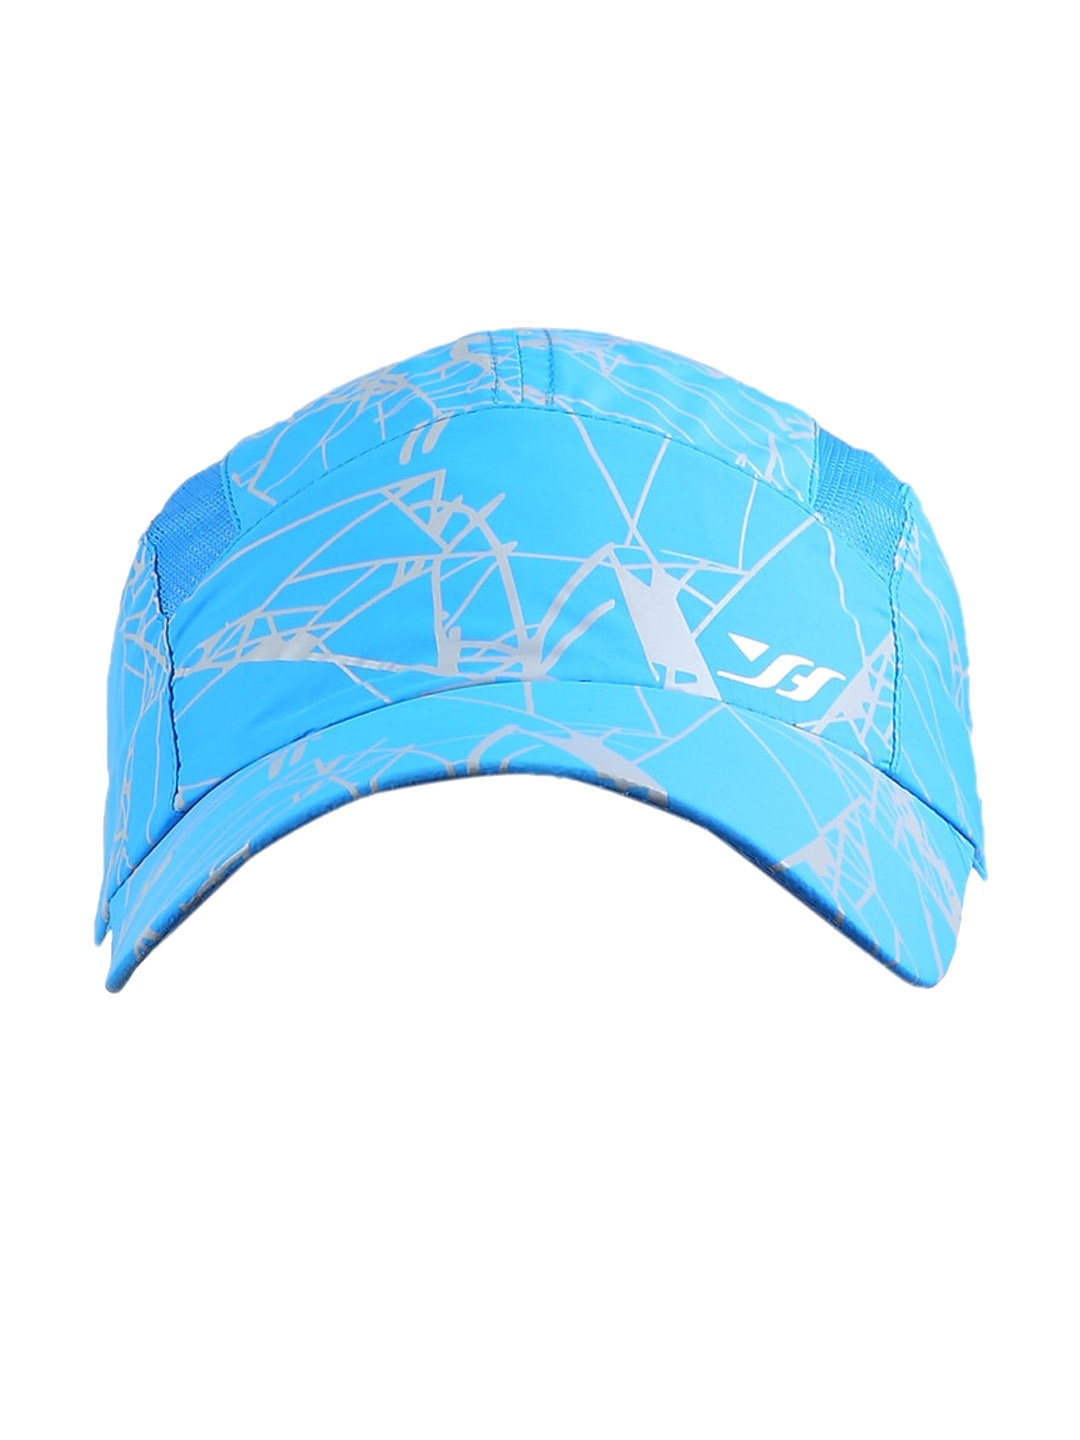 Accessories Hat | Bunnywave Unisex Blue & Grey Printed Sun Hat - NU39671